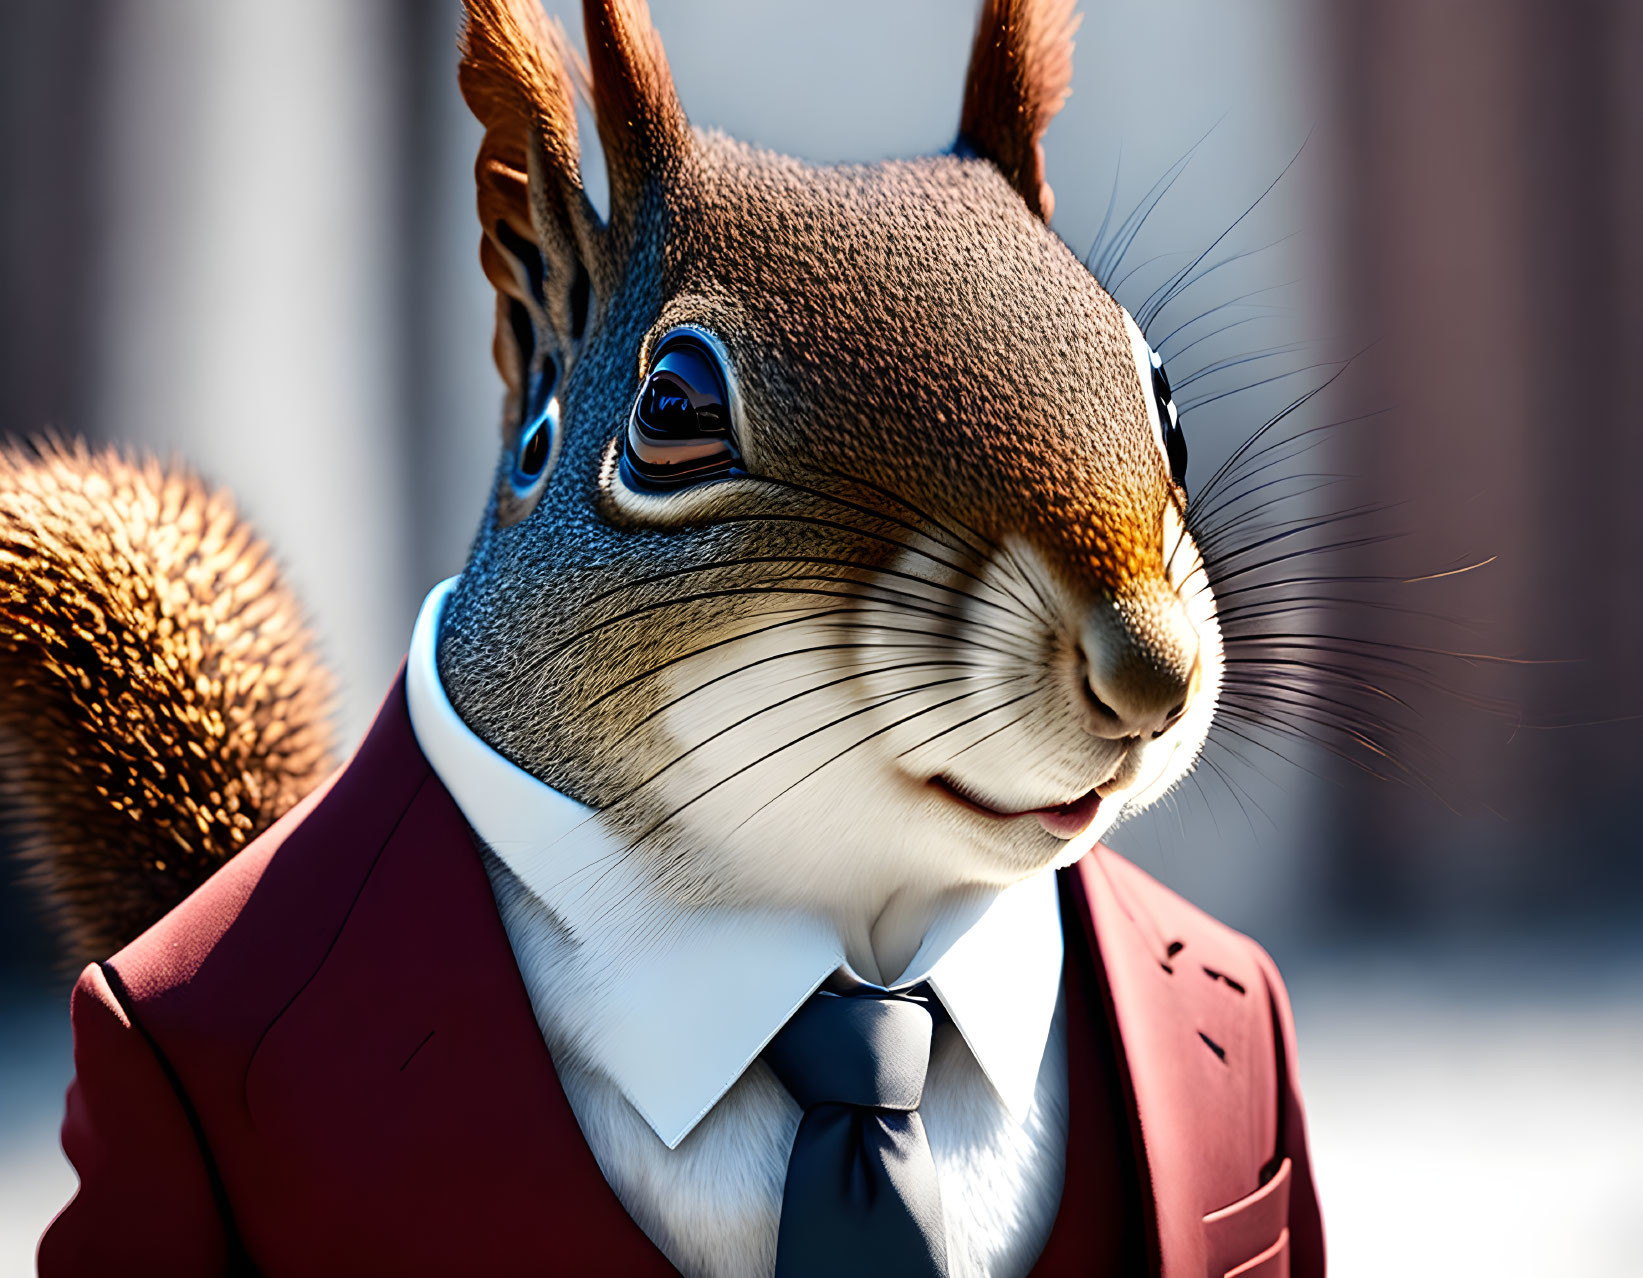 Squirrel in a Suit >:)